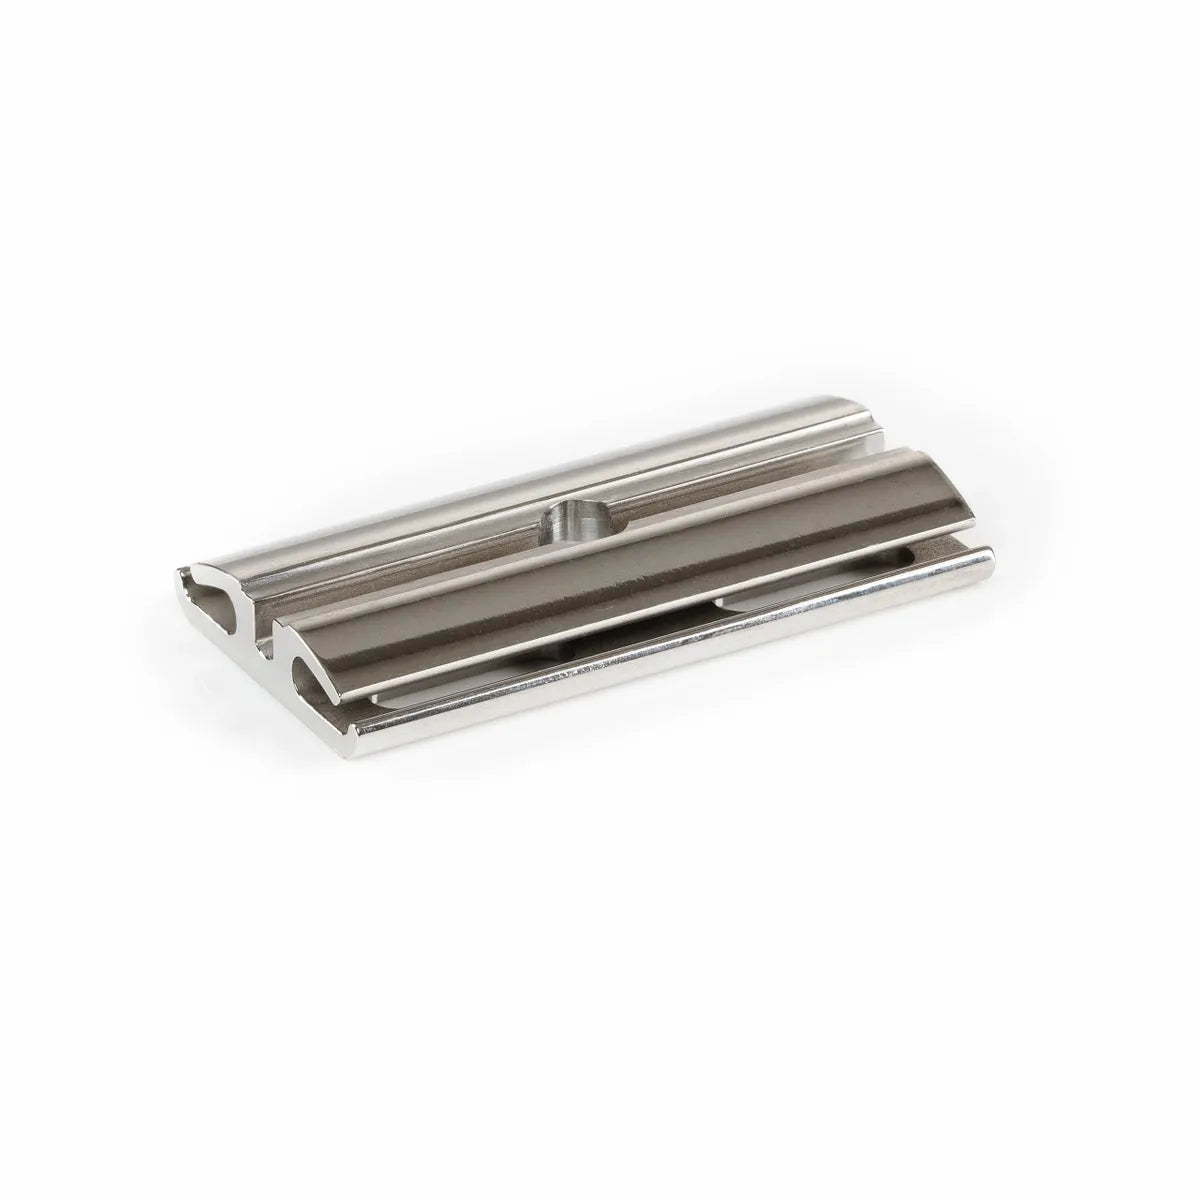 TISLIM: Titanium SLIM Edition Double Edge Safety Razor: 0.5 mm Blade Gap